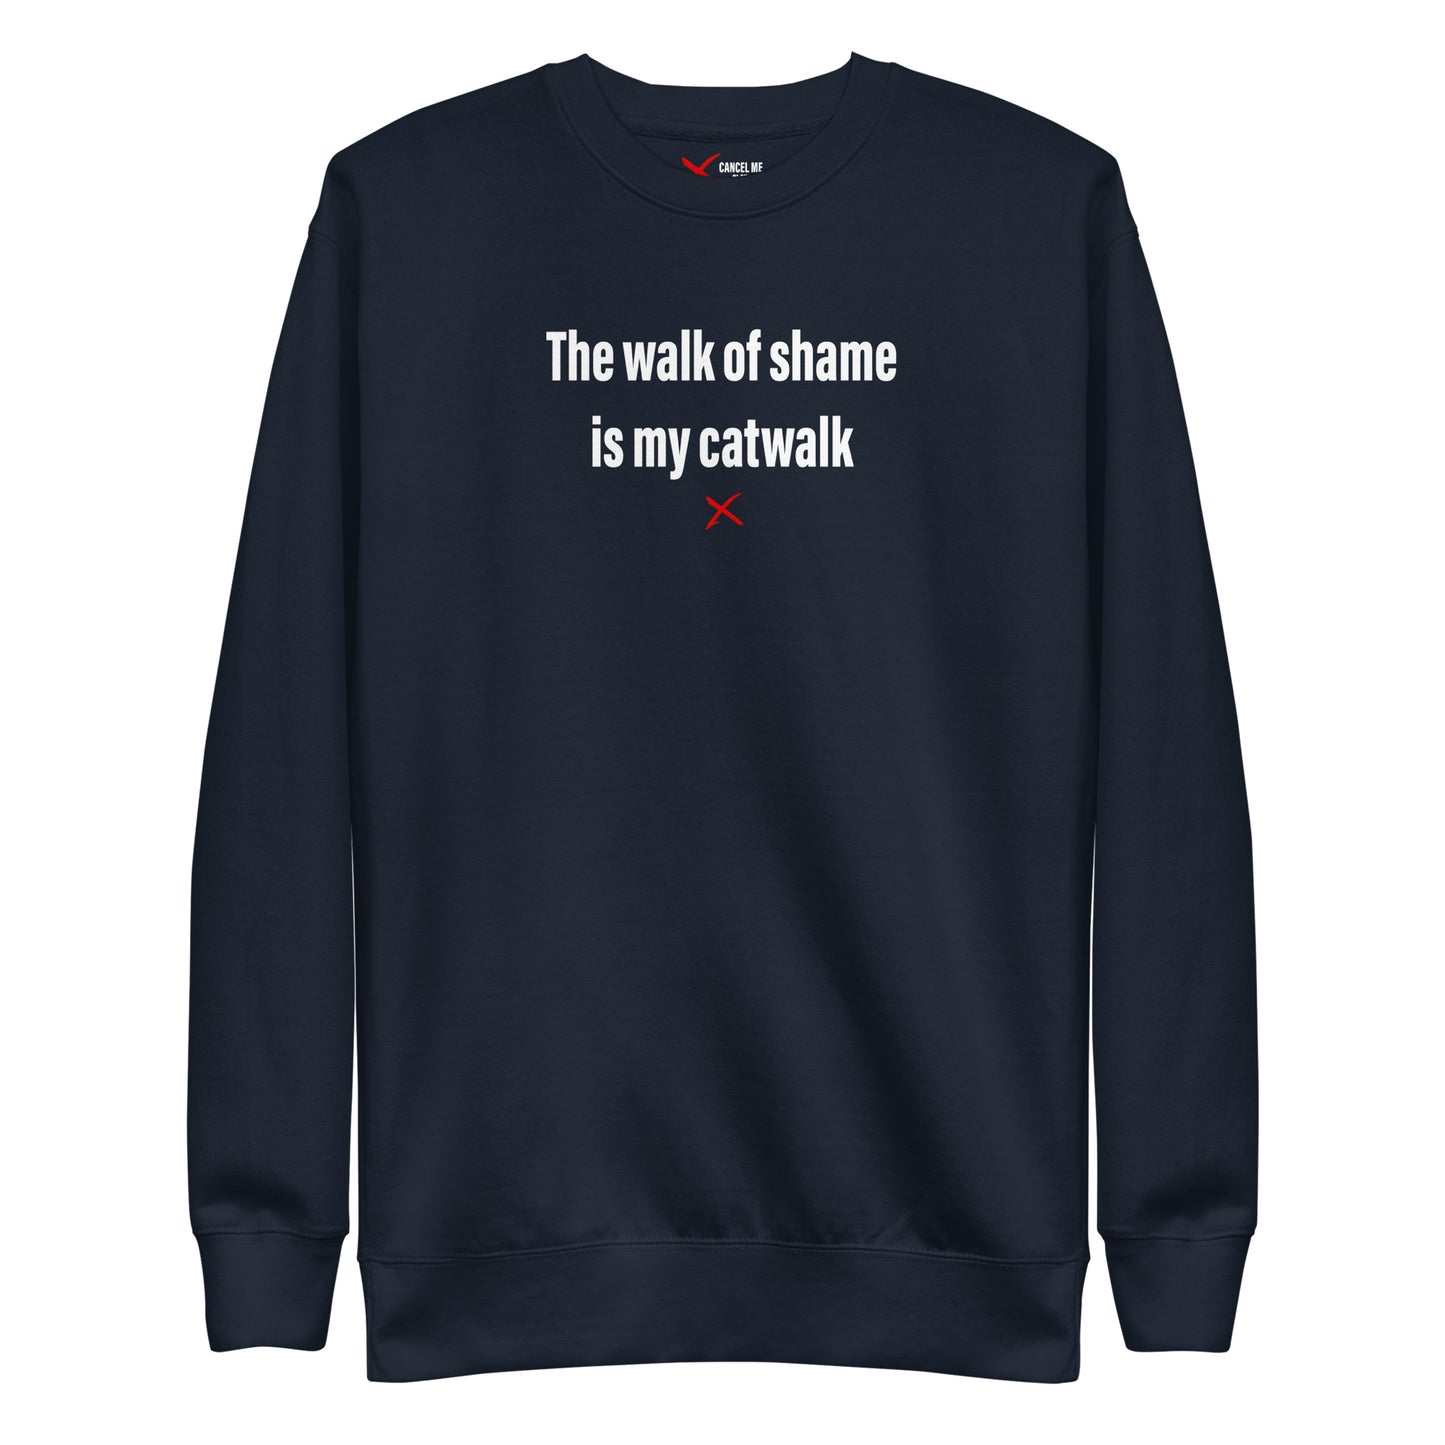 The walk of shame is my catwalk - Sweatshirt